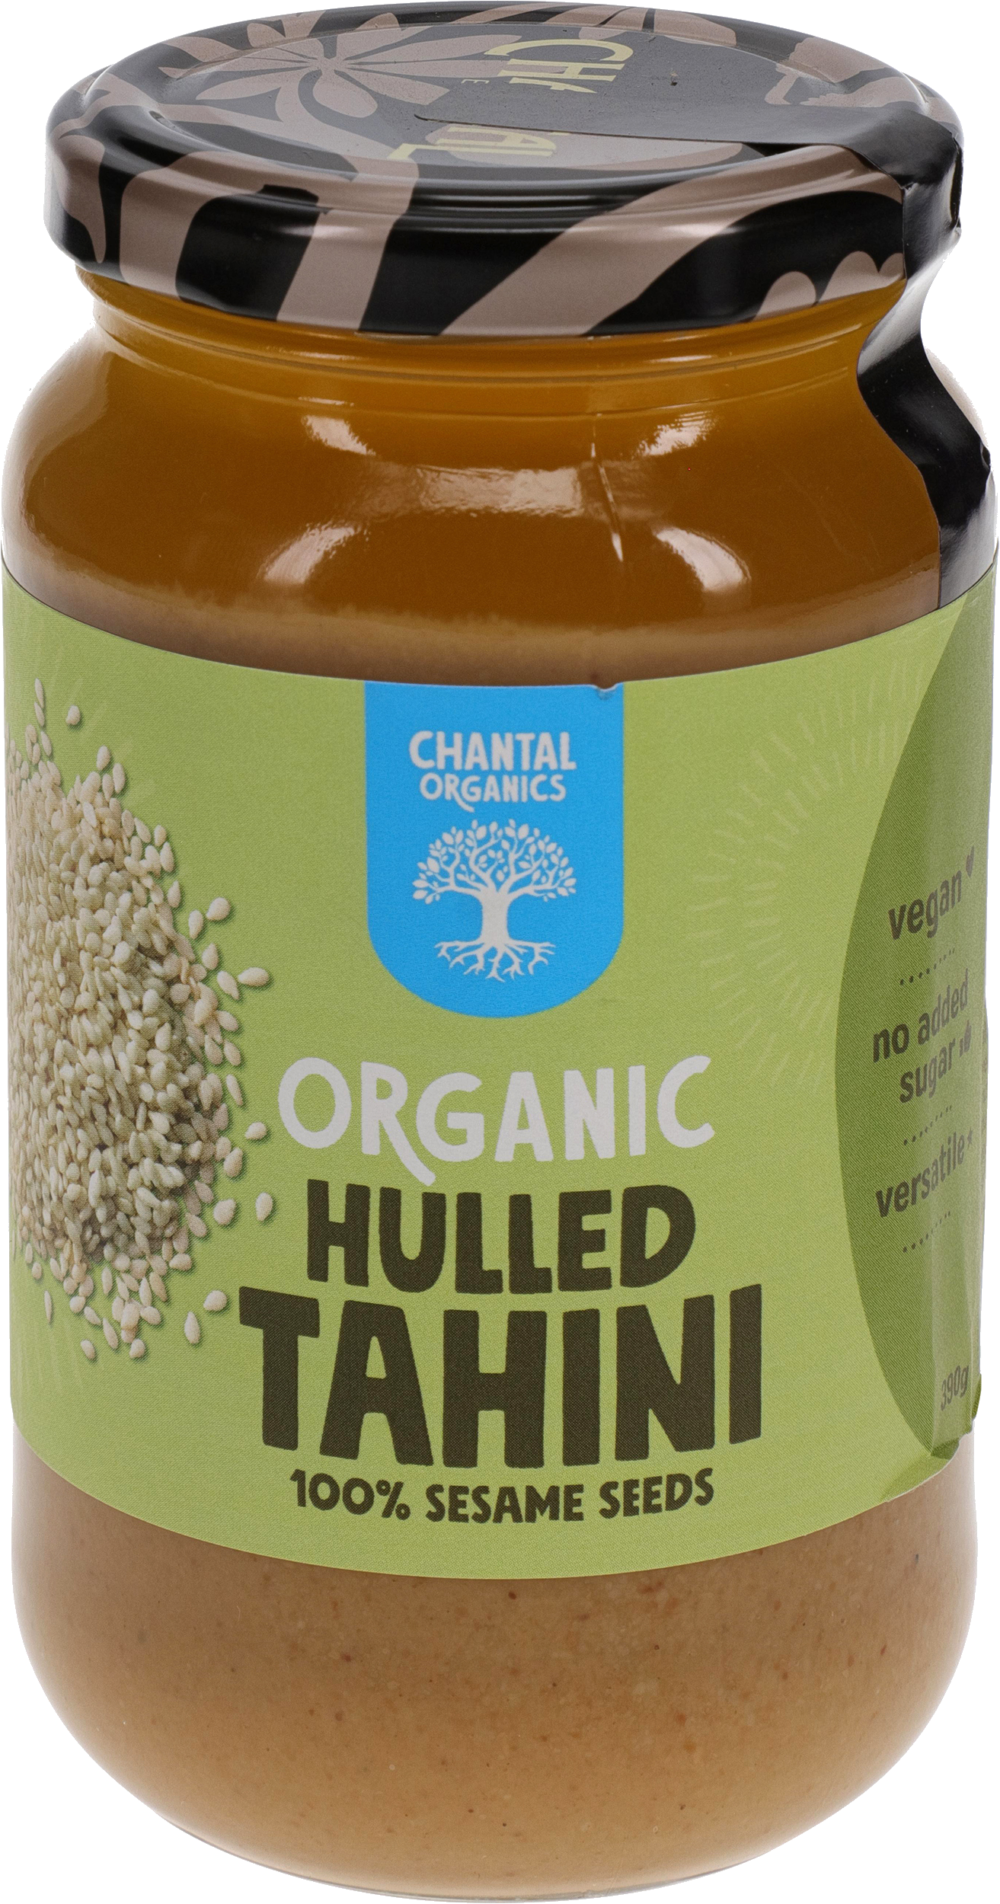 Chantal - Organic Tahini Hulled - [390g]